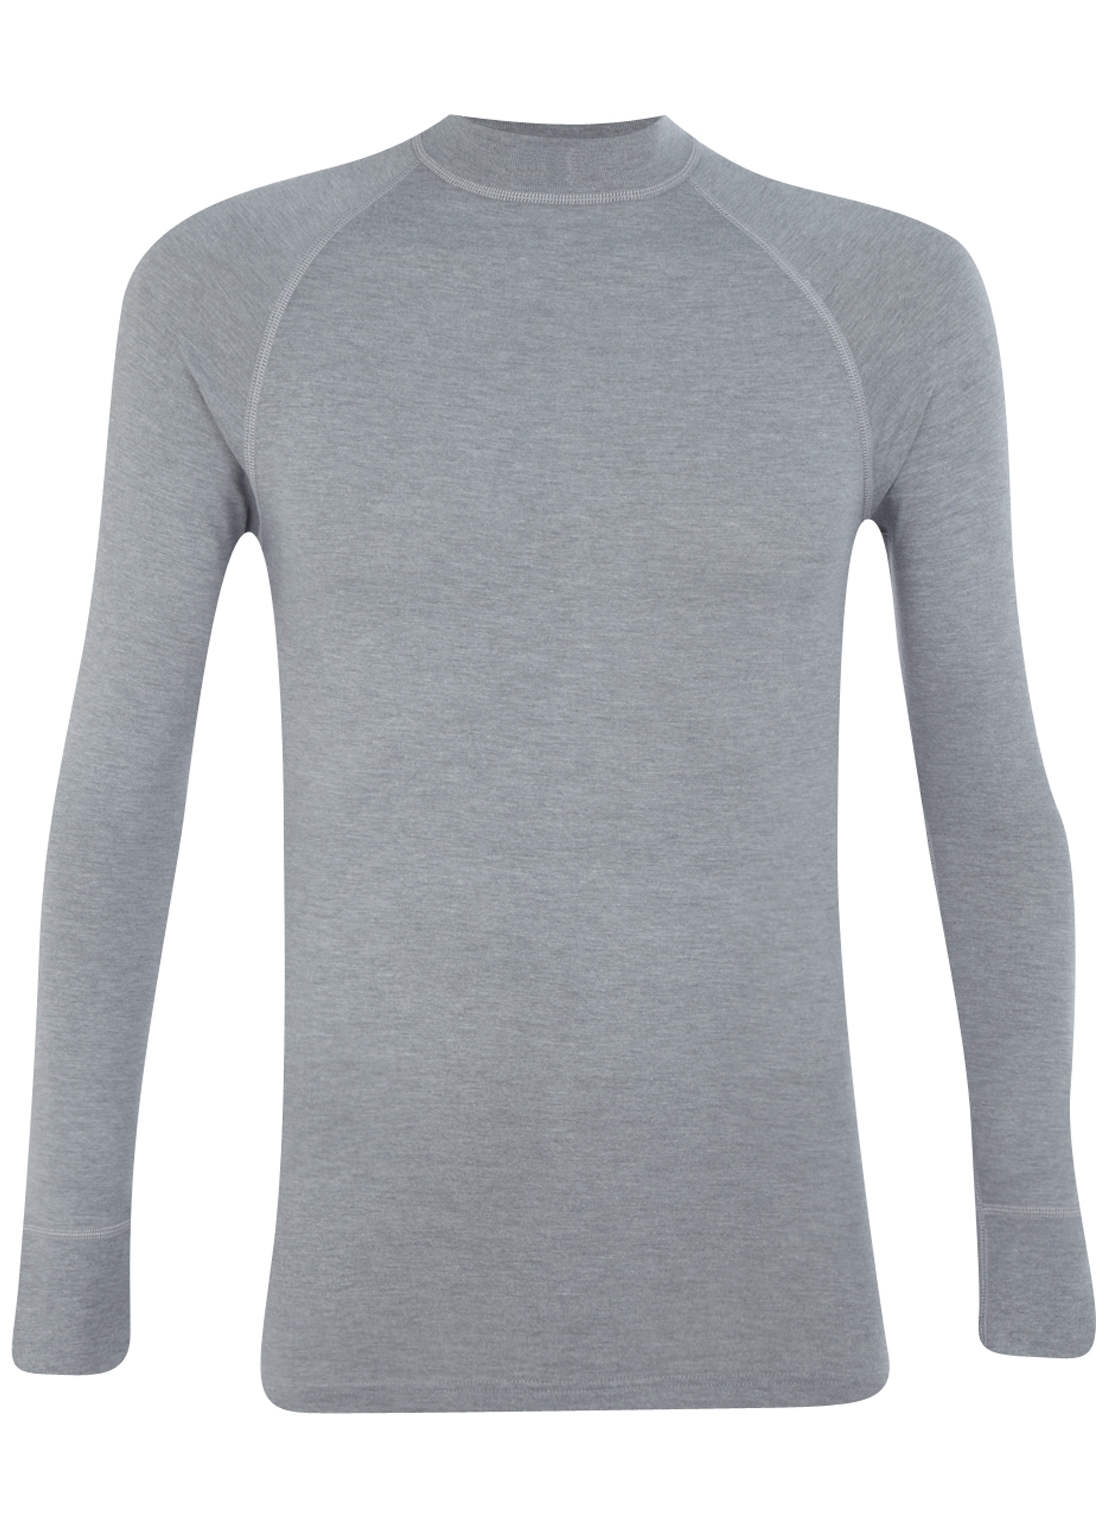 RJ Bodywear, thermo T-shirt lange mouw, grijs